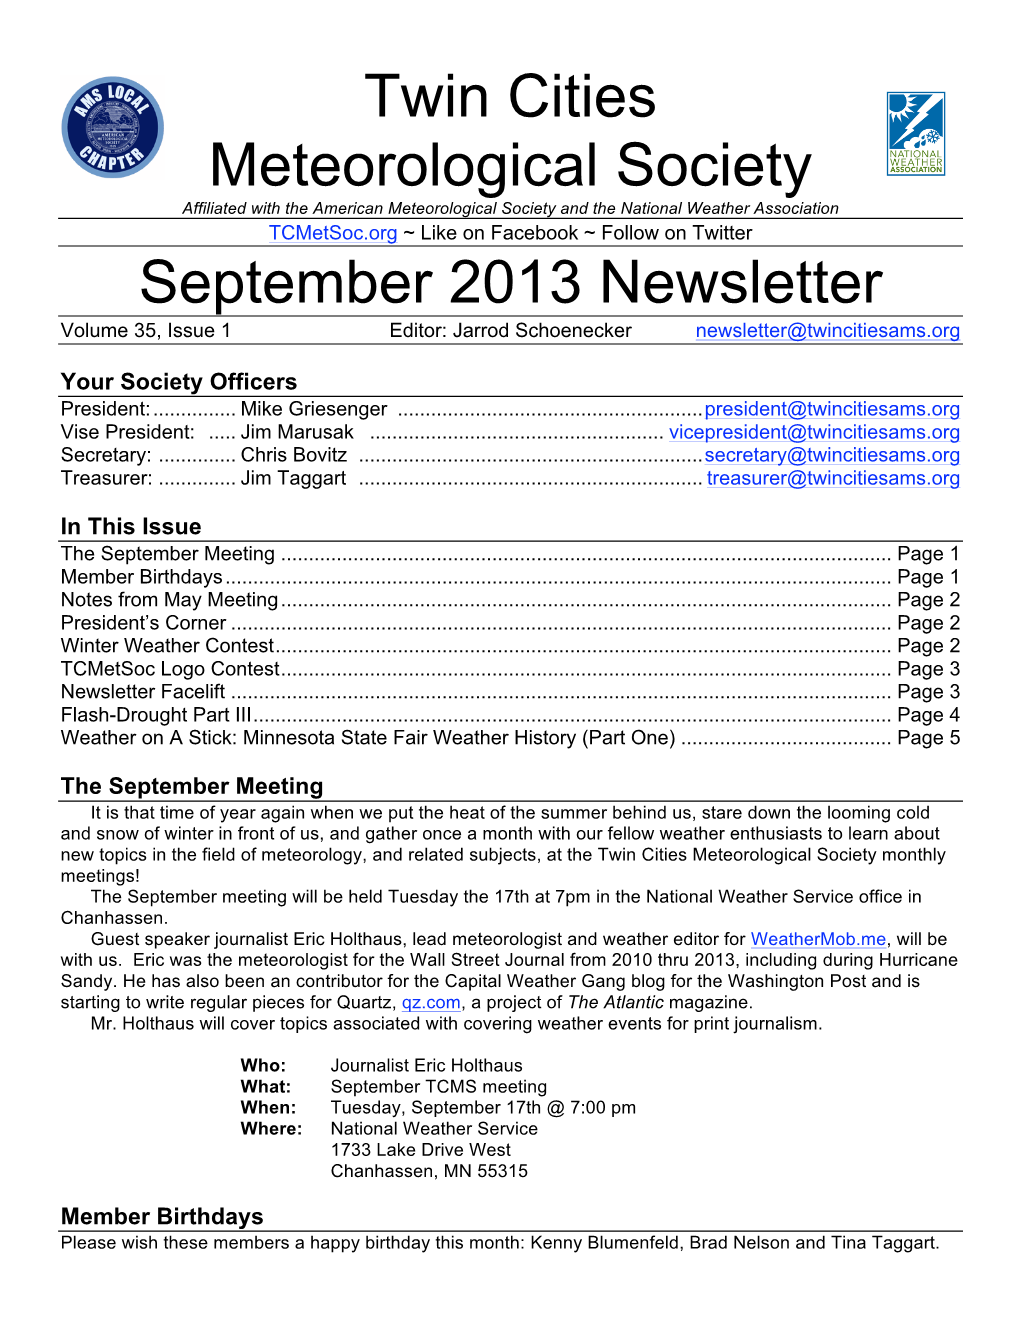 Twin Cities Meteorological Society September 2013 Newsletter